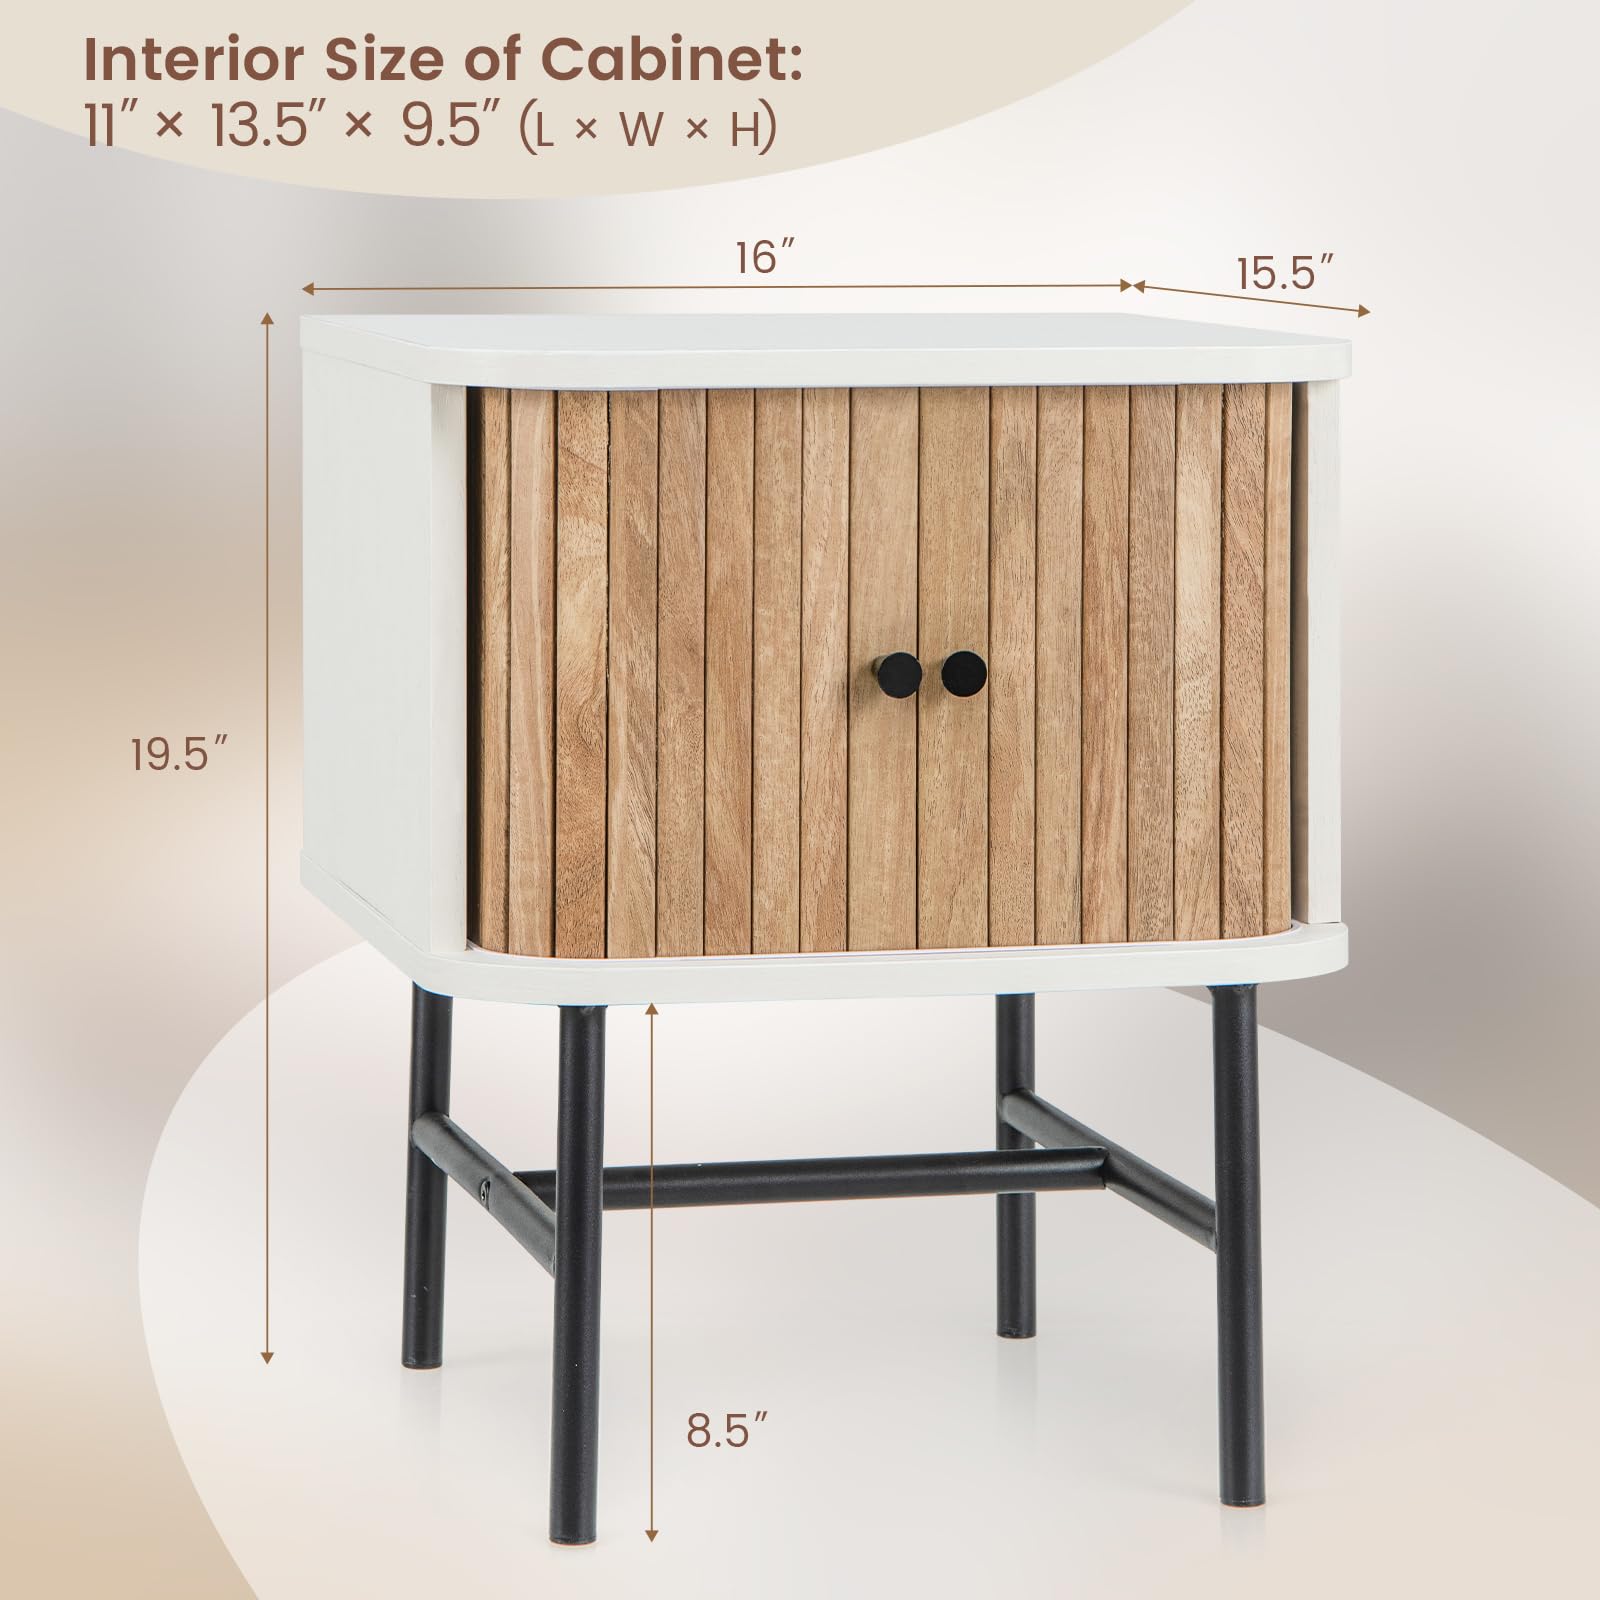 Giantex Mid-Century Modern Nightstand, Wood Bedside Table with Sliding Doors and 4 Metal Legs